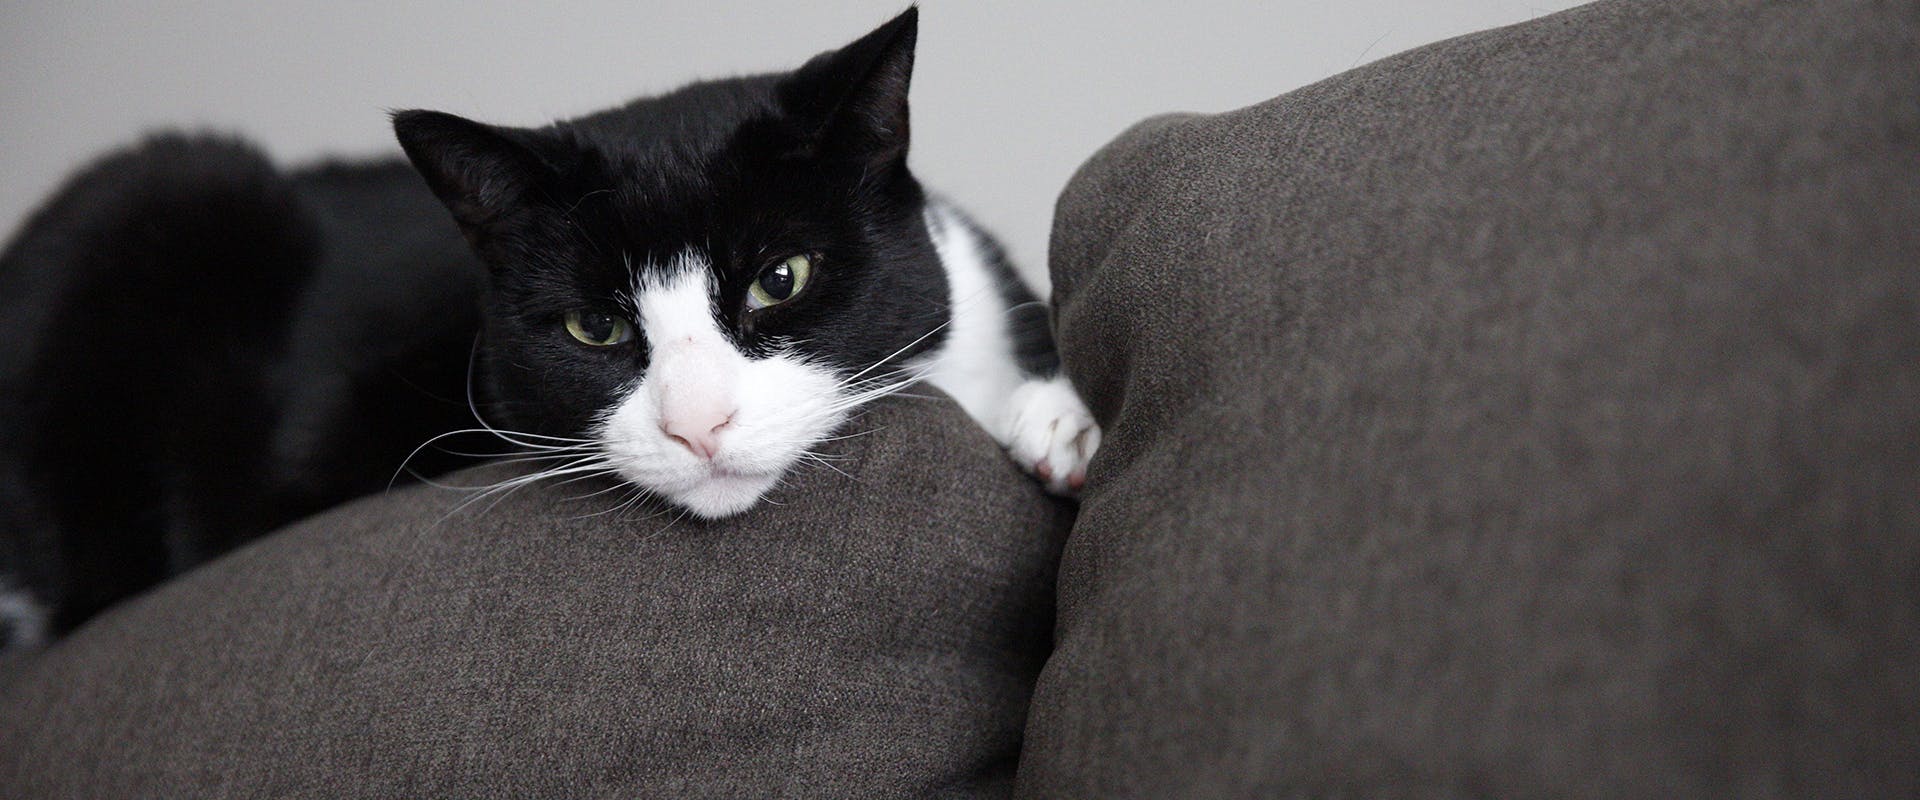 Tuxedo cat names - a black and white Tuxedo cat laying across a sofa